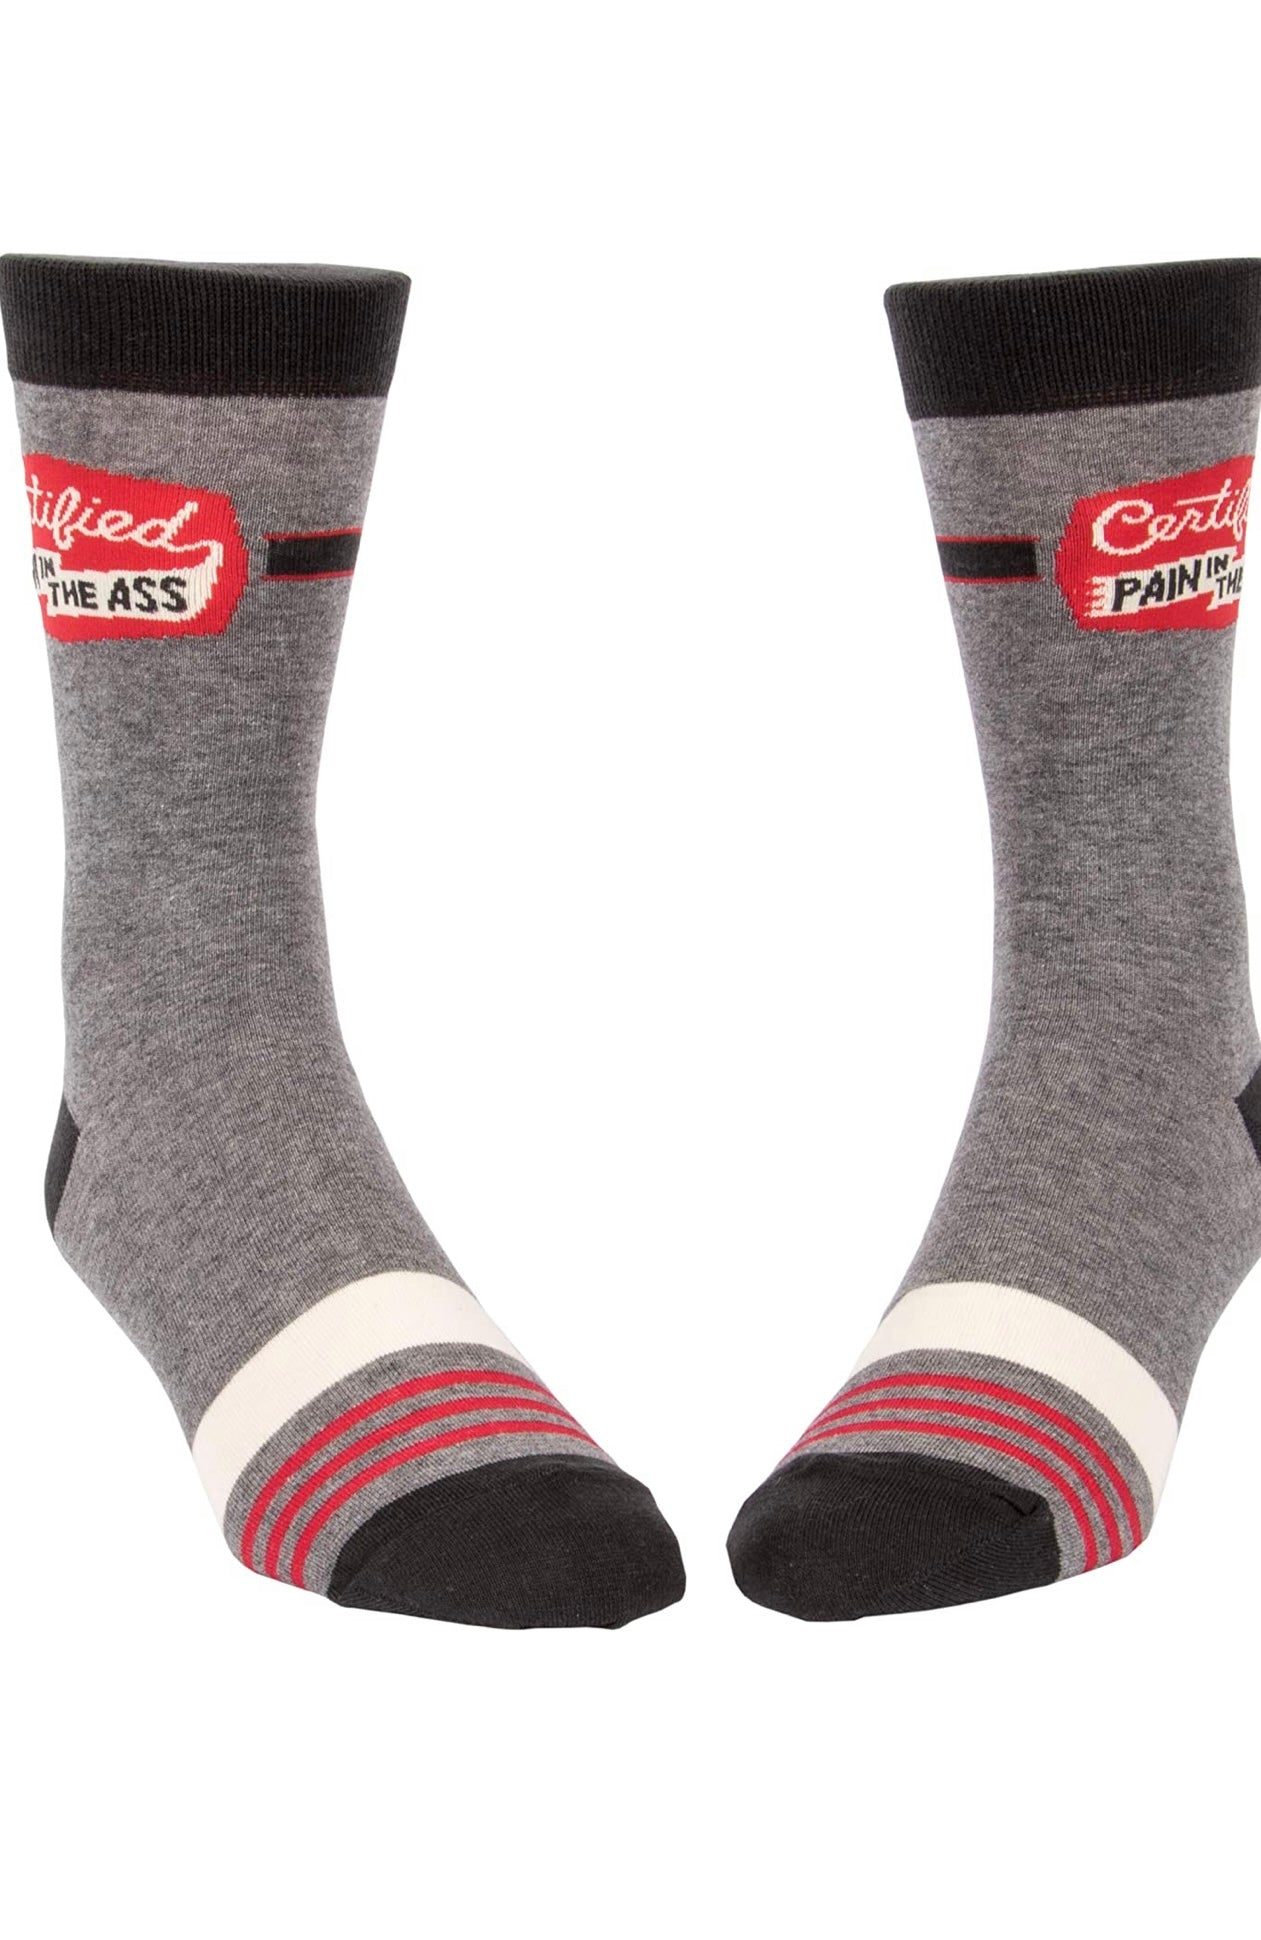 Certified Pain in the Ass Men's Crew Novelty Socks